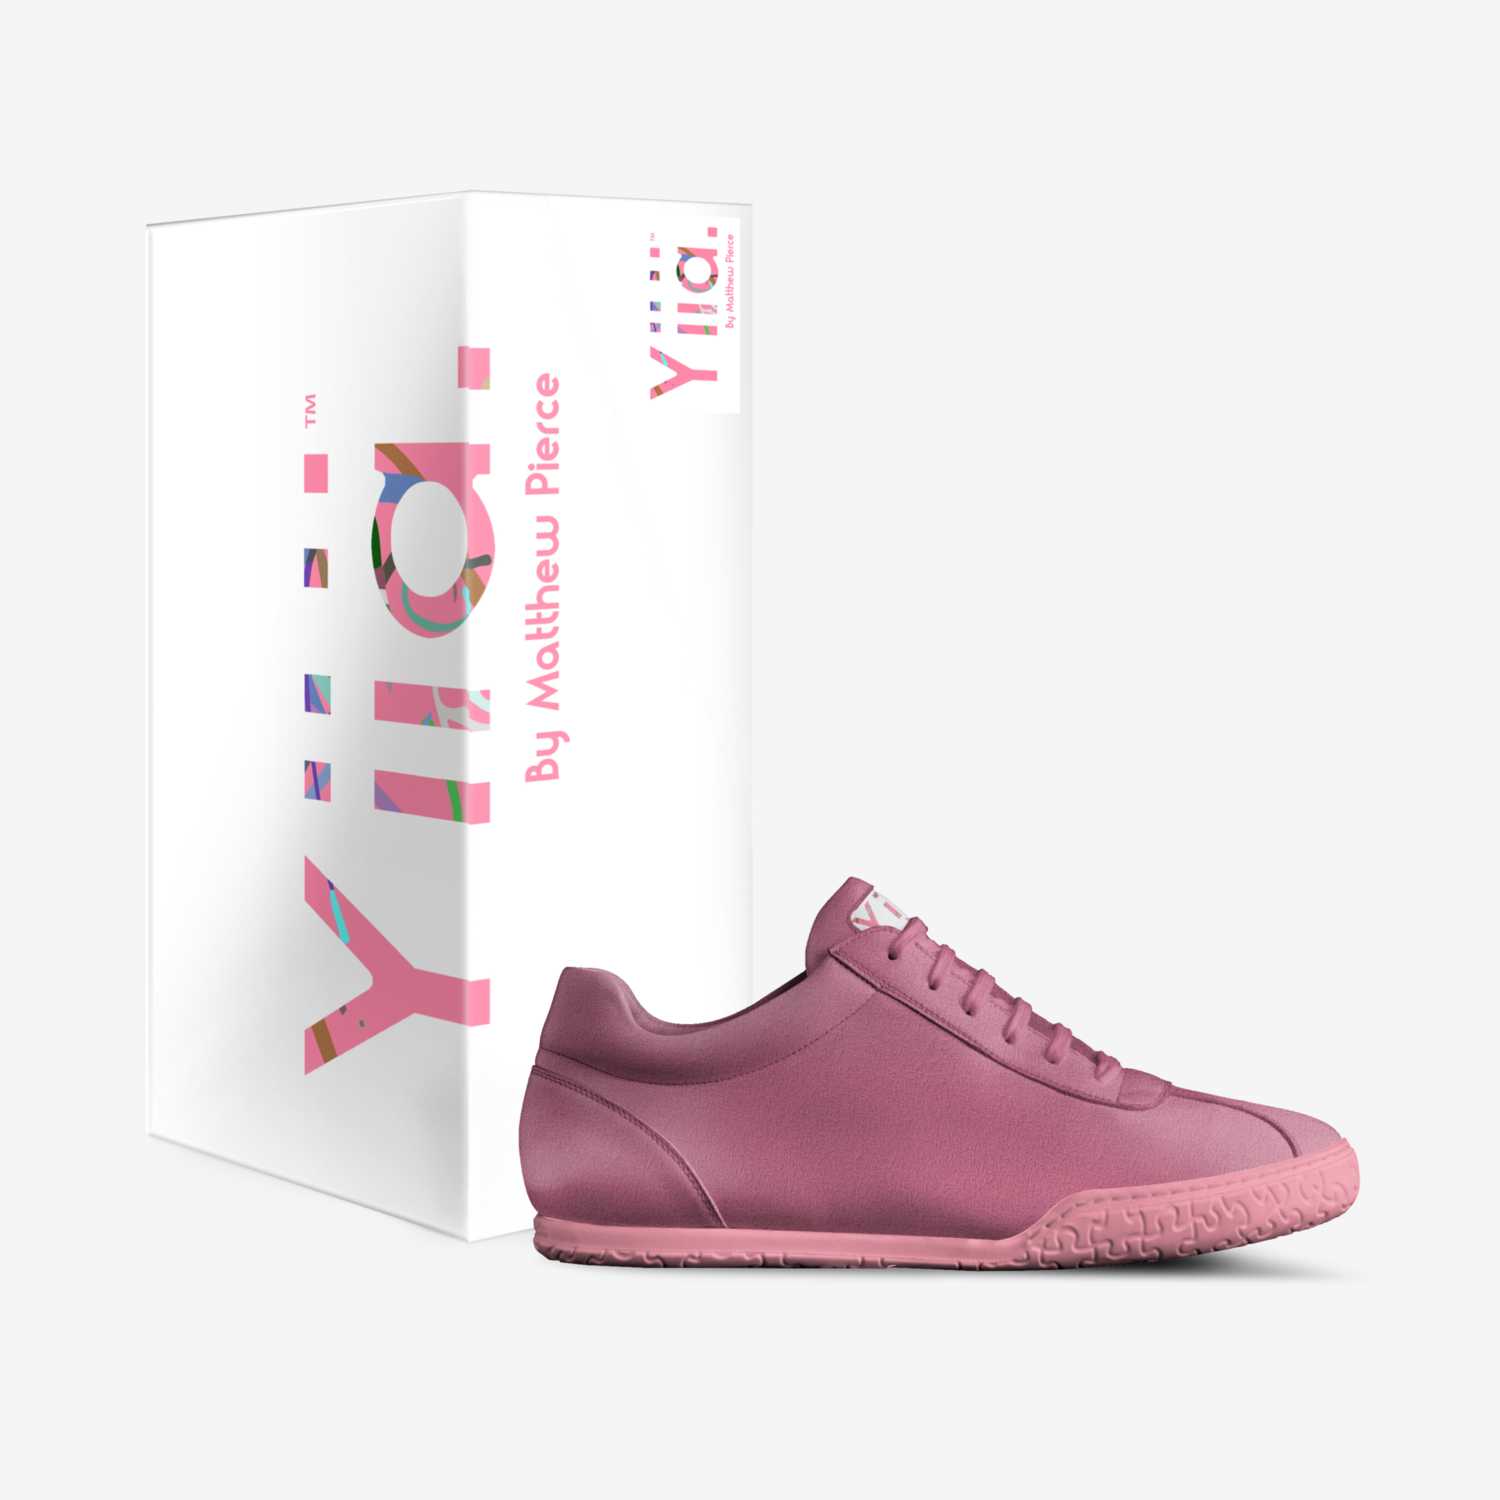 YIIÄ custom made in Italy shoes by Matthew Pierce | Box view